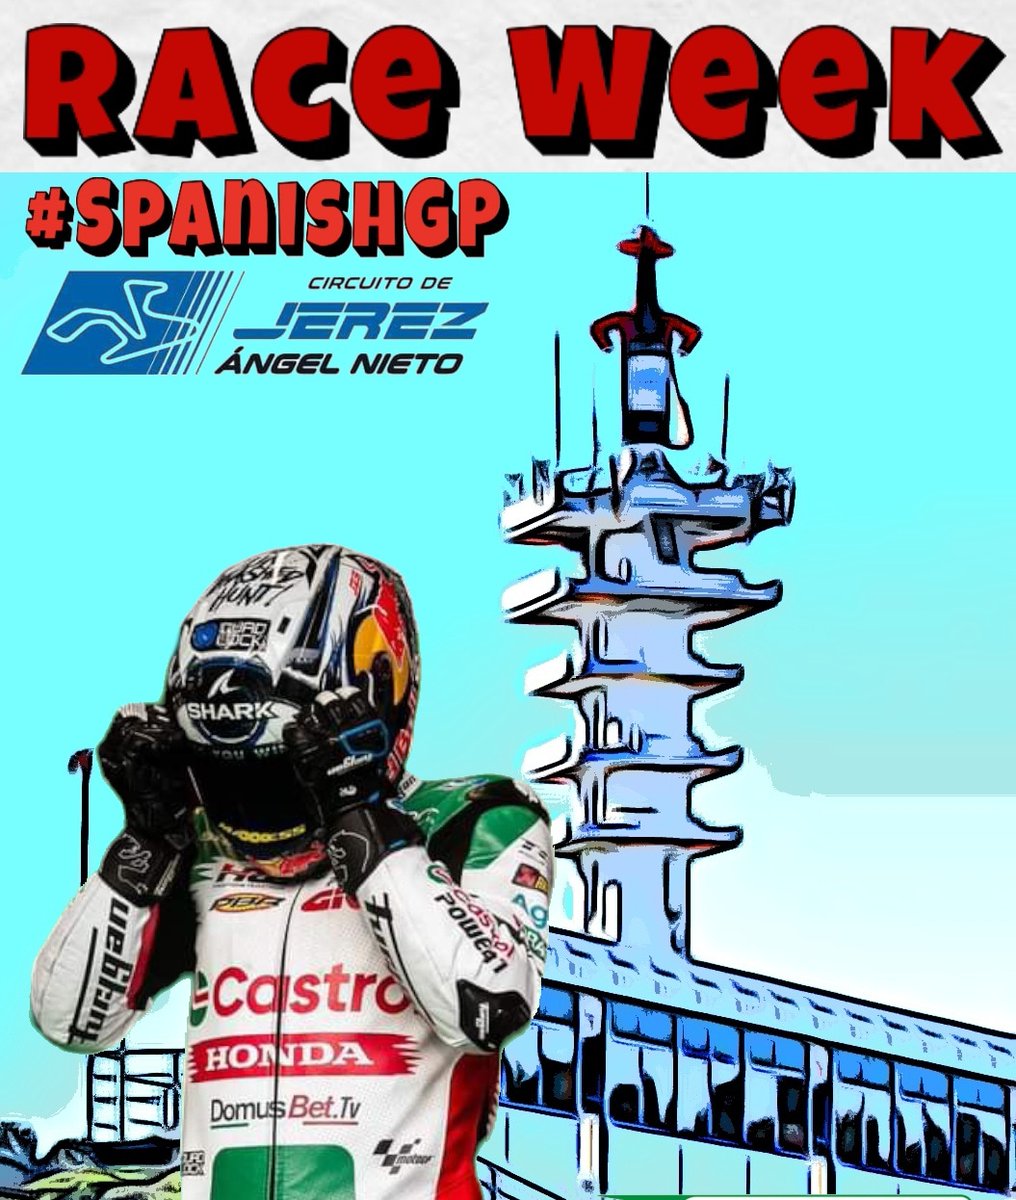 #SpanishGP #RaceWeek #LCR #HRC @lcr_team @circuitodejerez